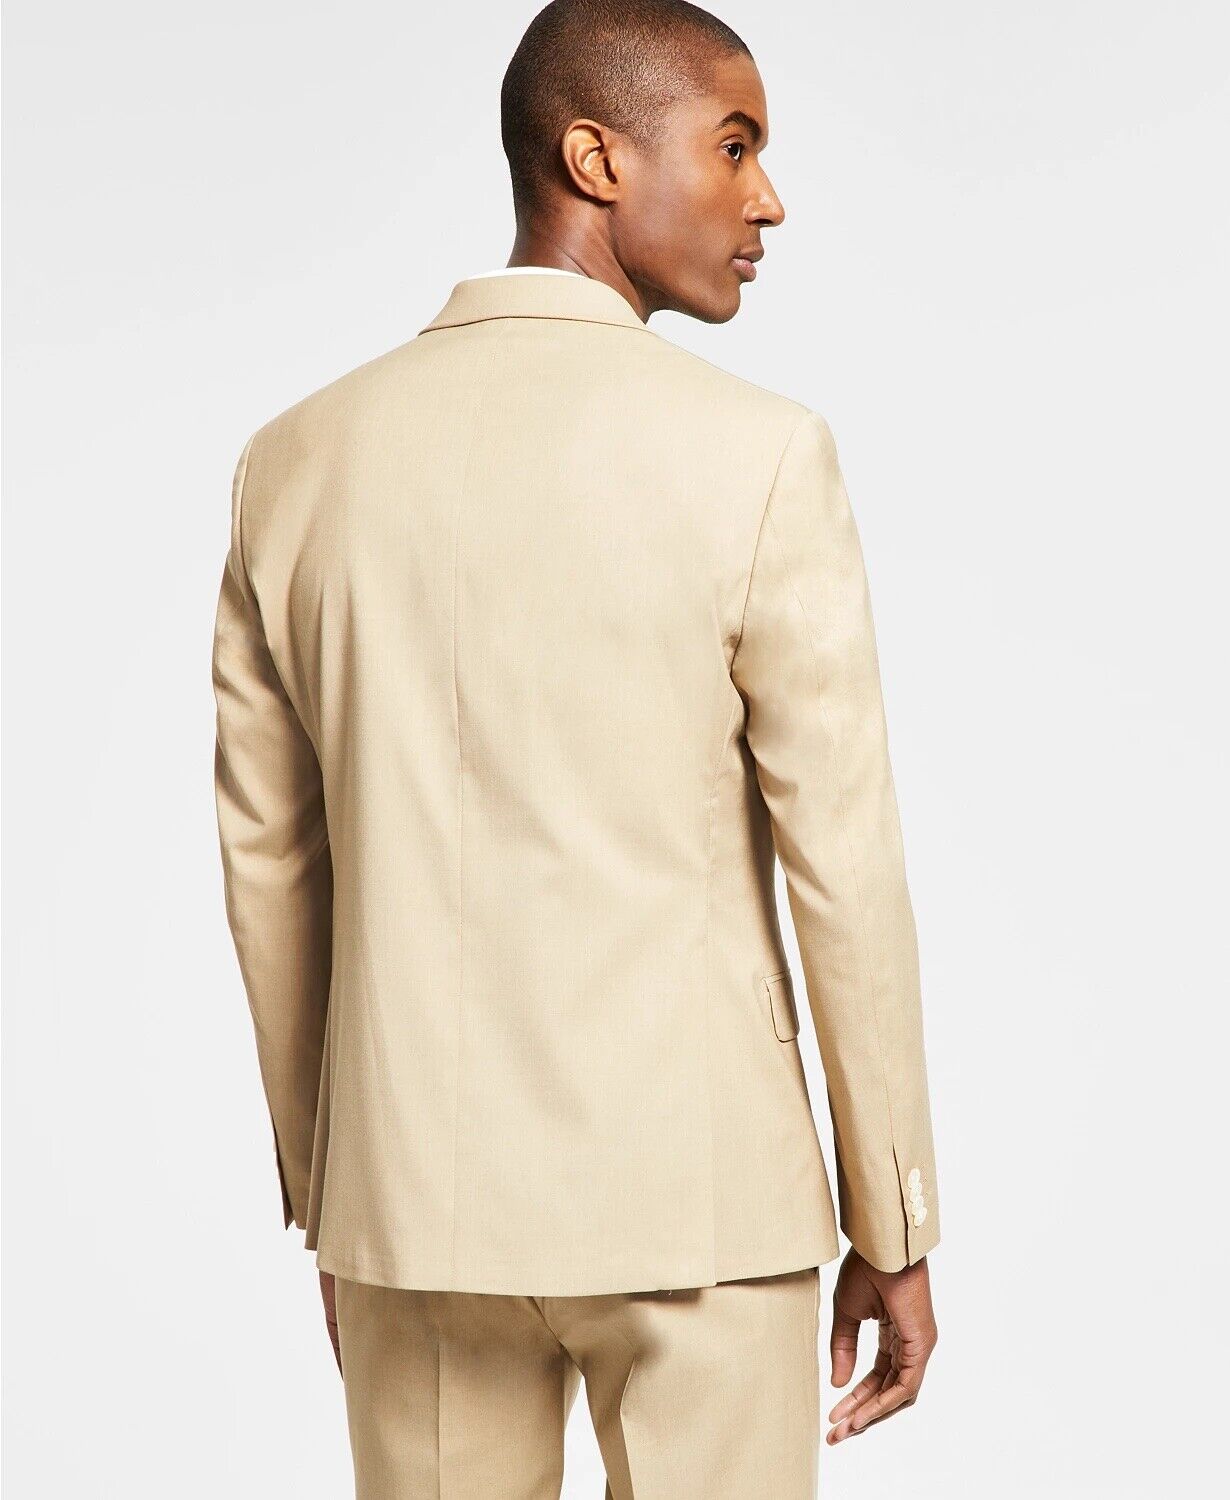 Alfani Men's Suit Jacket Caramel Brown 36S Slim-Fit Stretch Solid